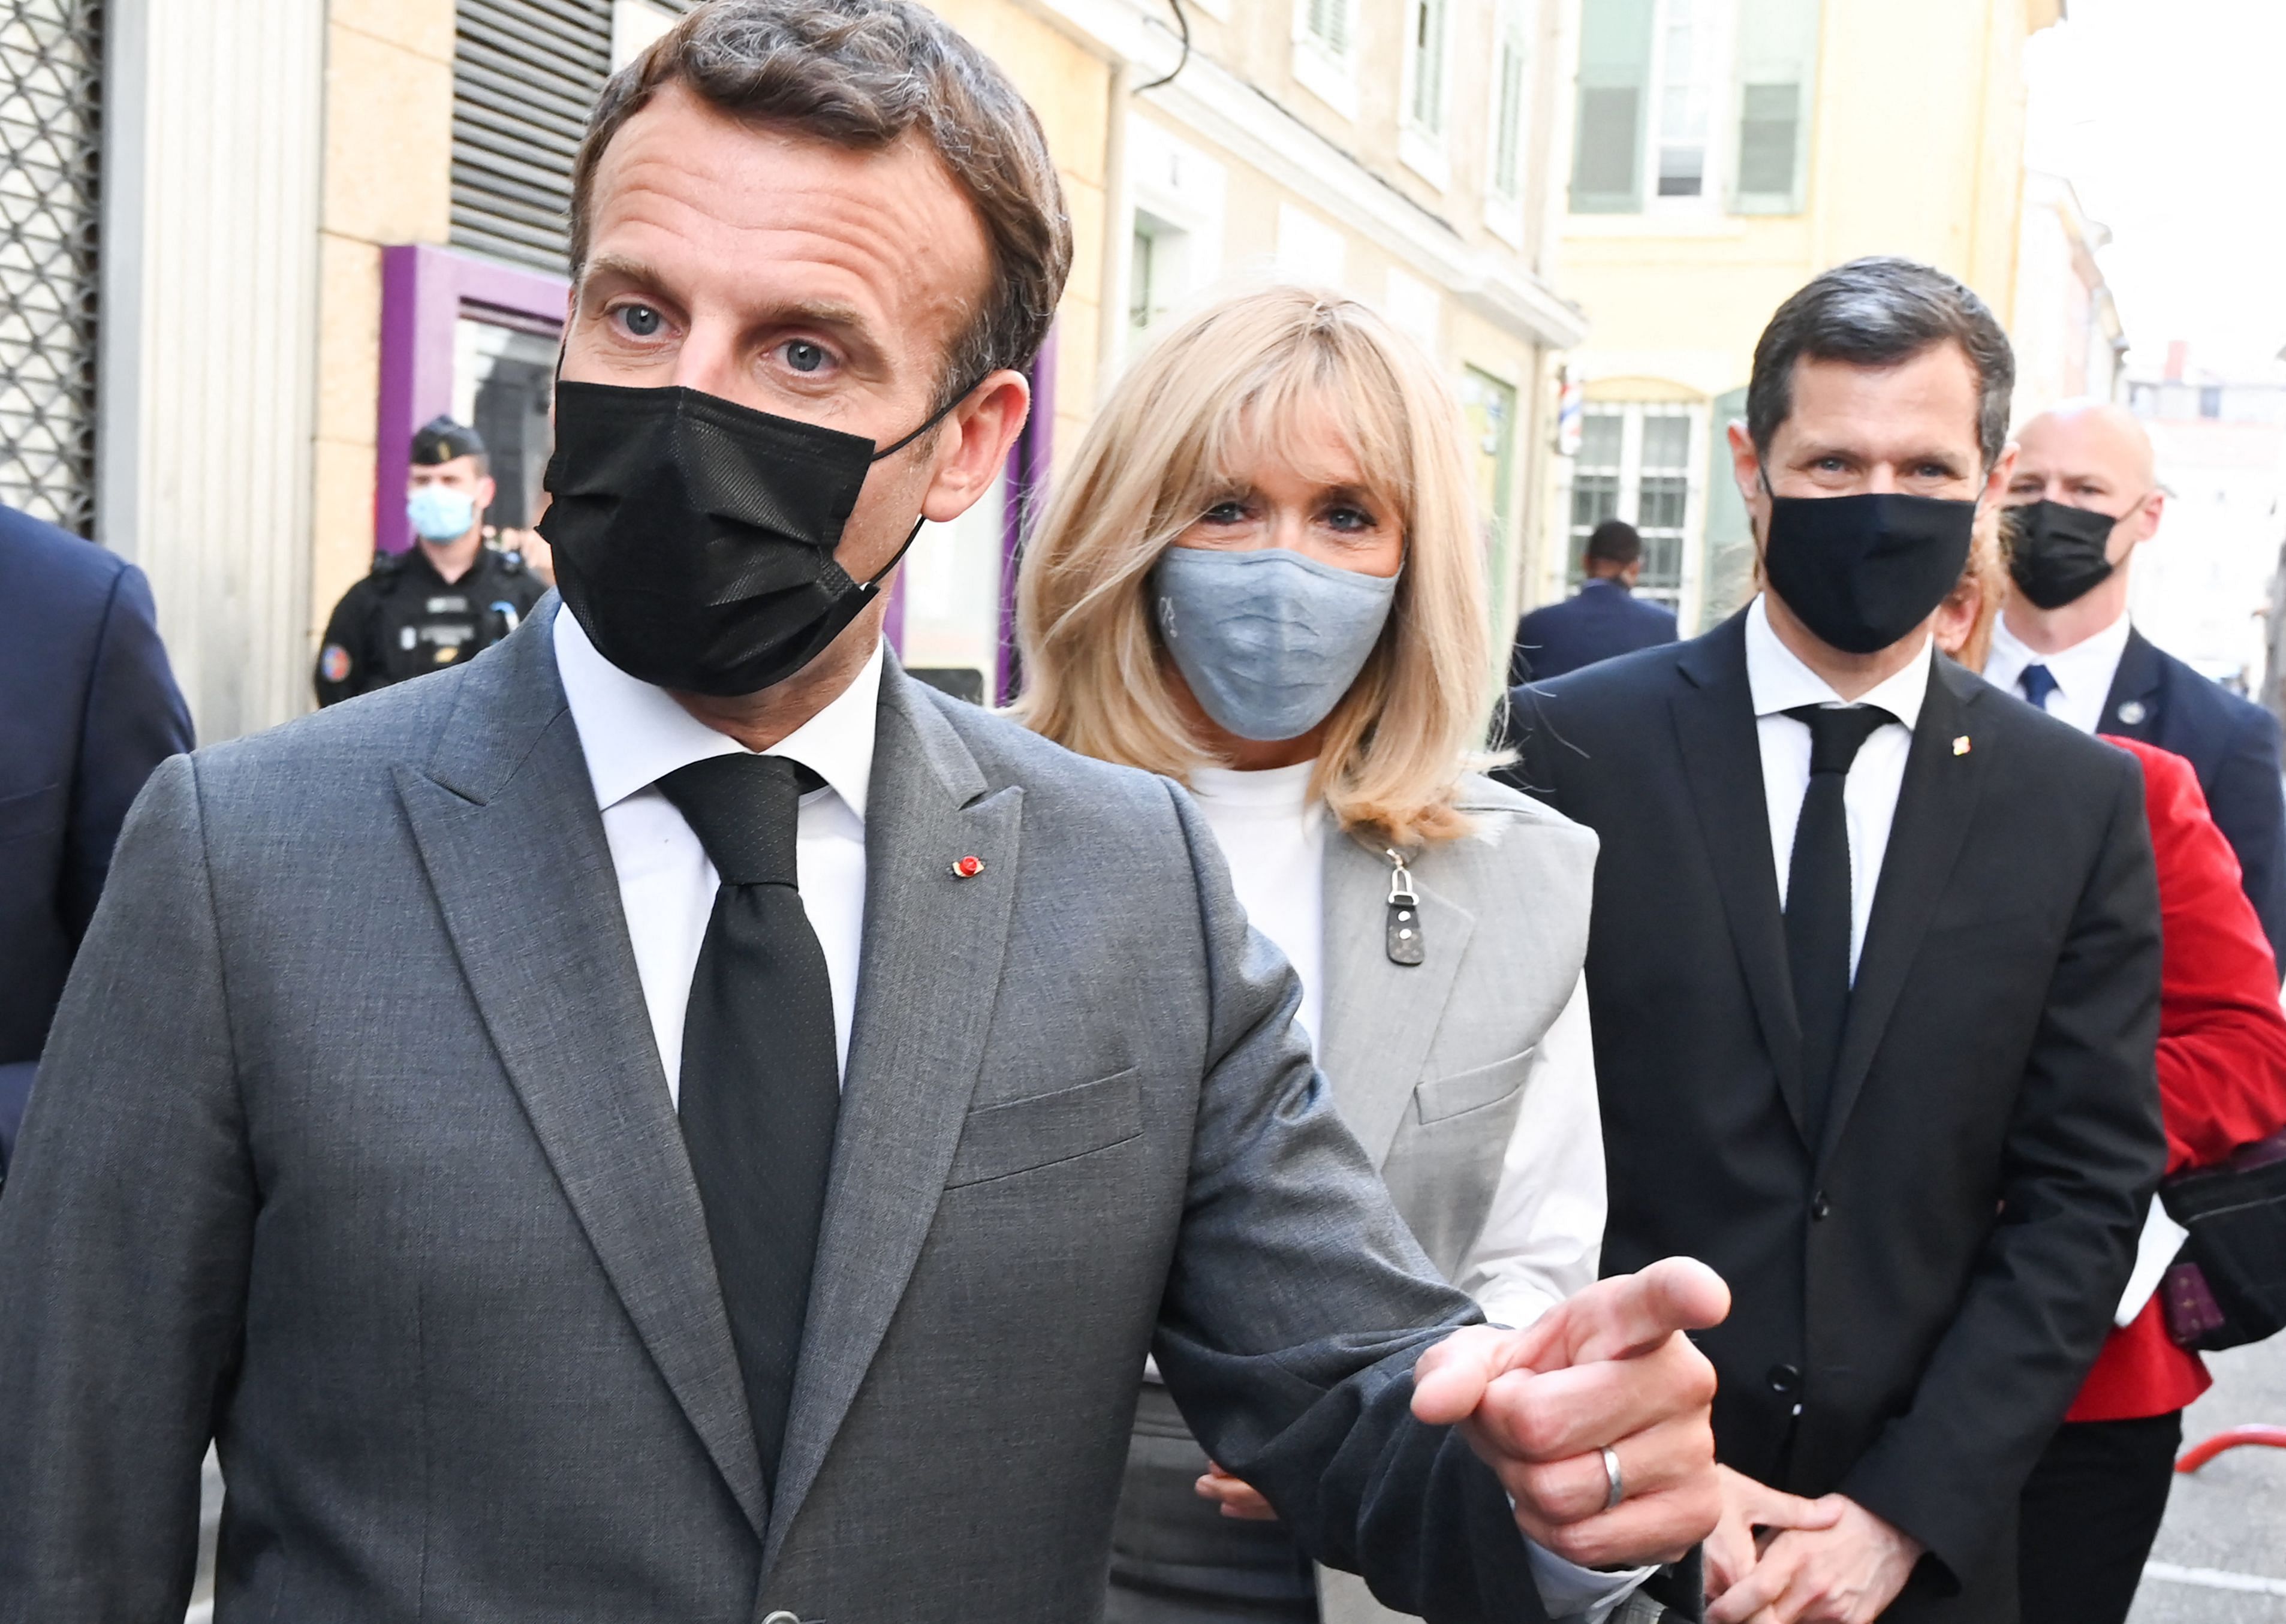 French President Emmanuel Macron. Credit: AFP Photo